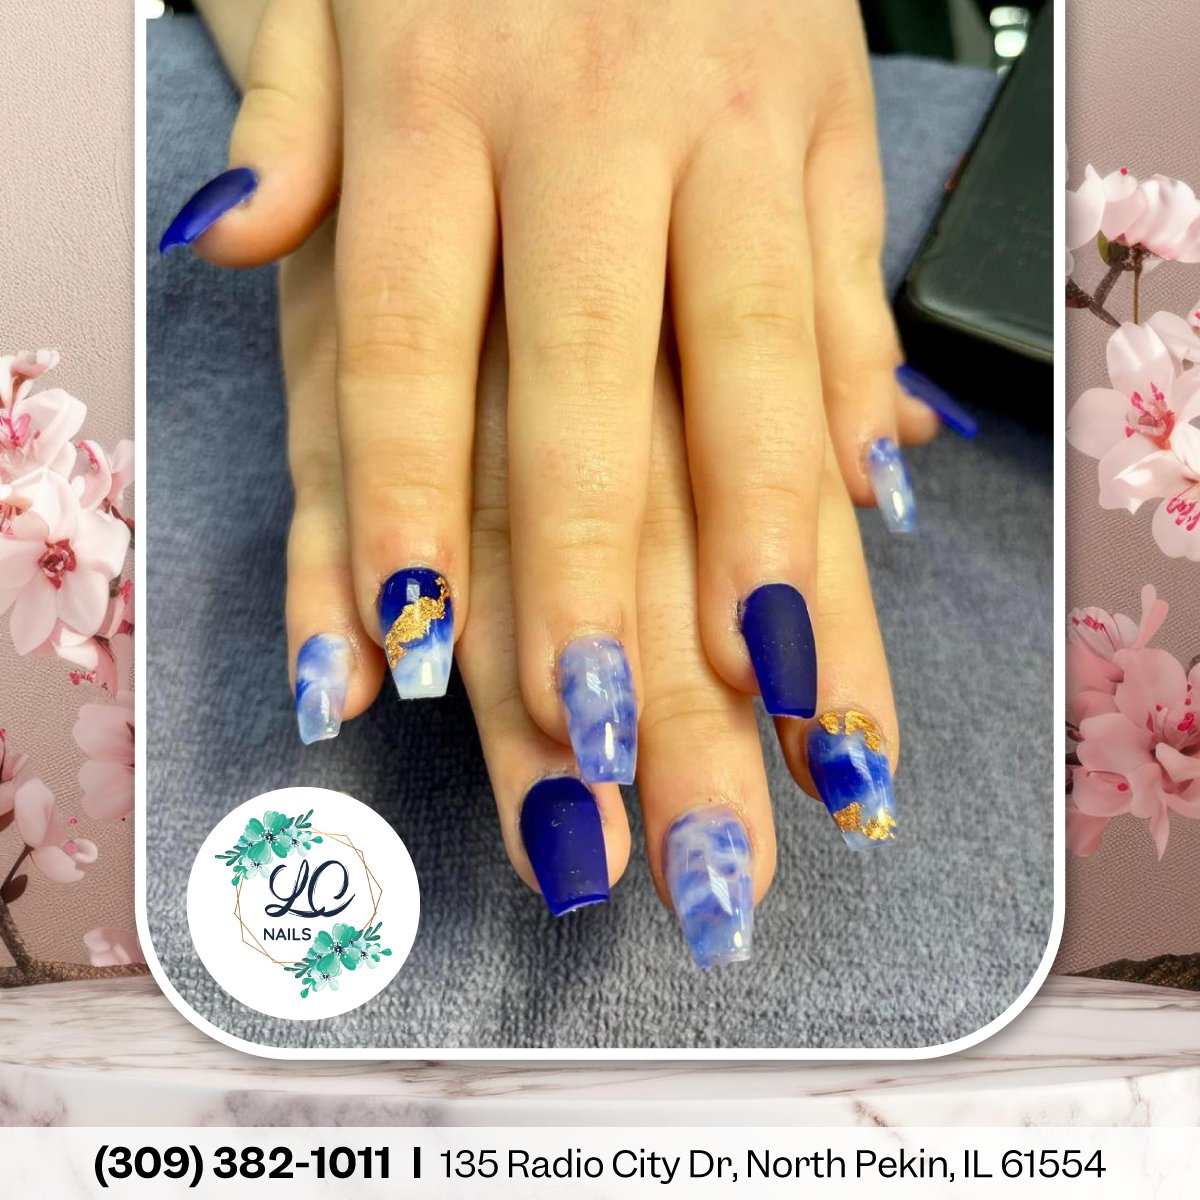 Ocean waves on my fingertips! Loving these dreamy blue marble nails.💙✨

#LCNails #nailsalonIL #pedicure #manicure #beauty #nailsalon #nailsalonnearme #nail #gelnails #nailstyle #nailsart #naildesign #love #acrylicnails #naildesigns #nailswag #nailpolish #gel #specialoffers